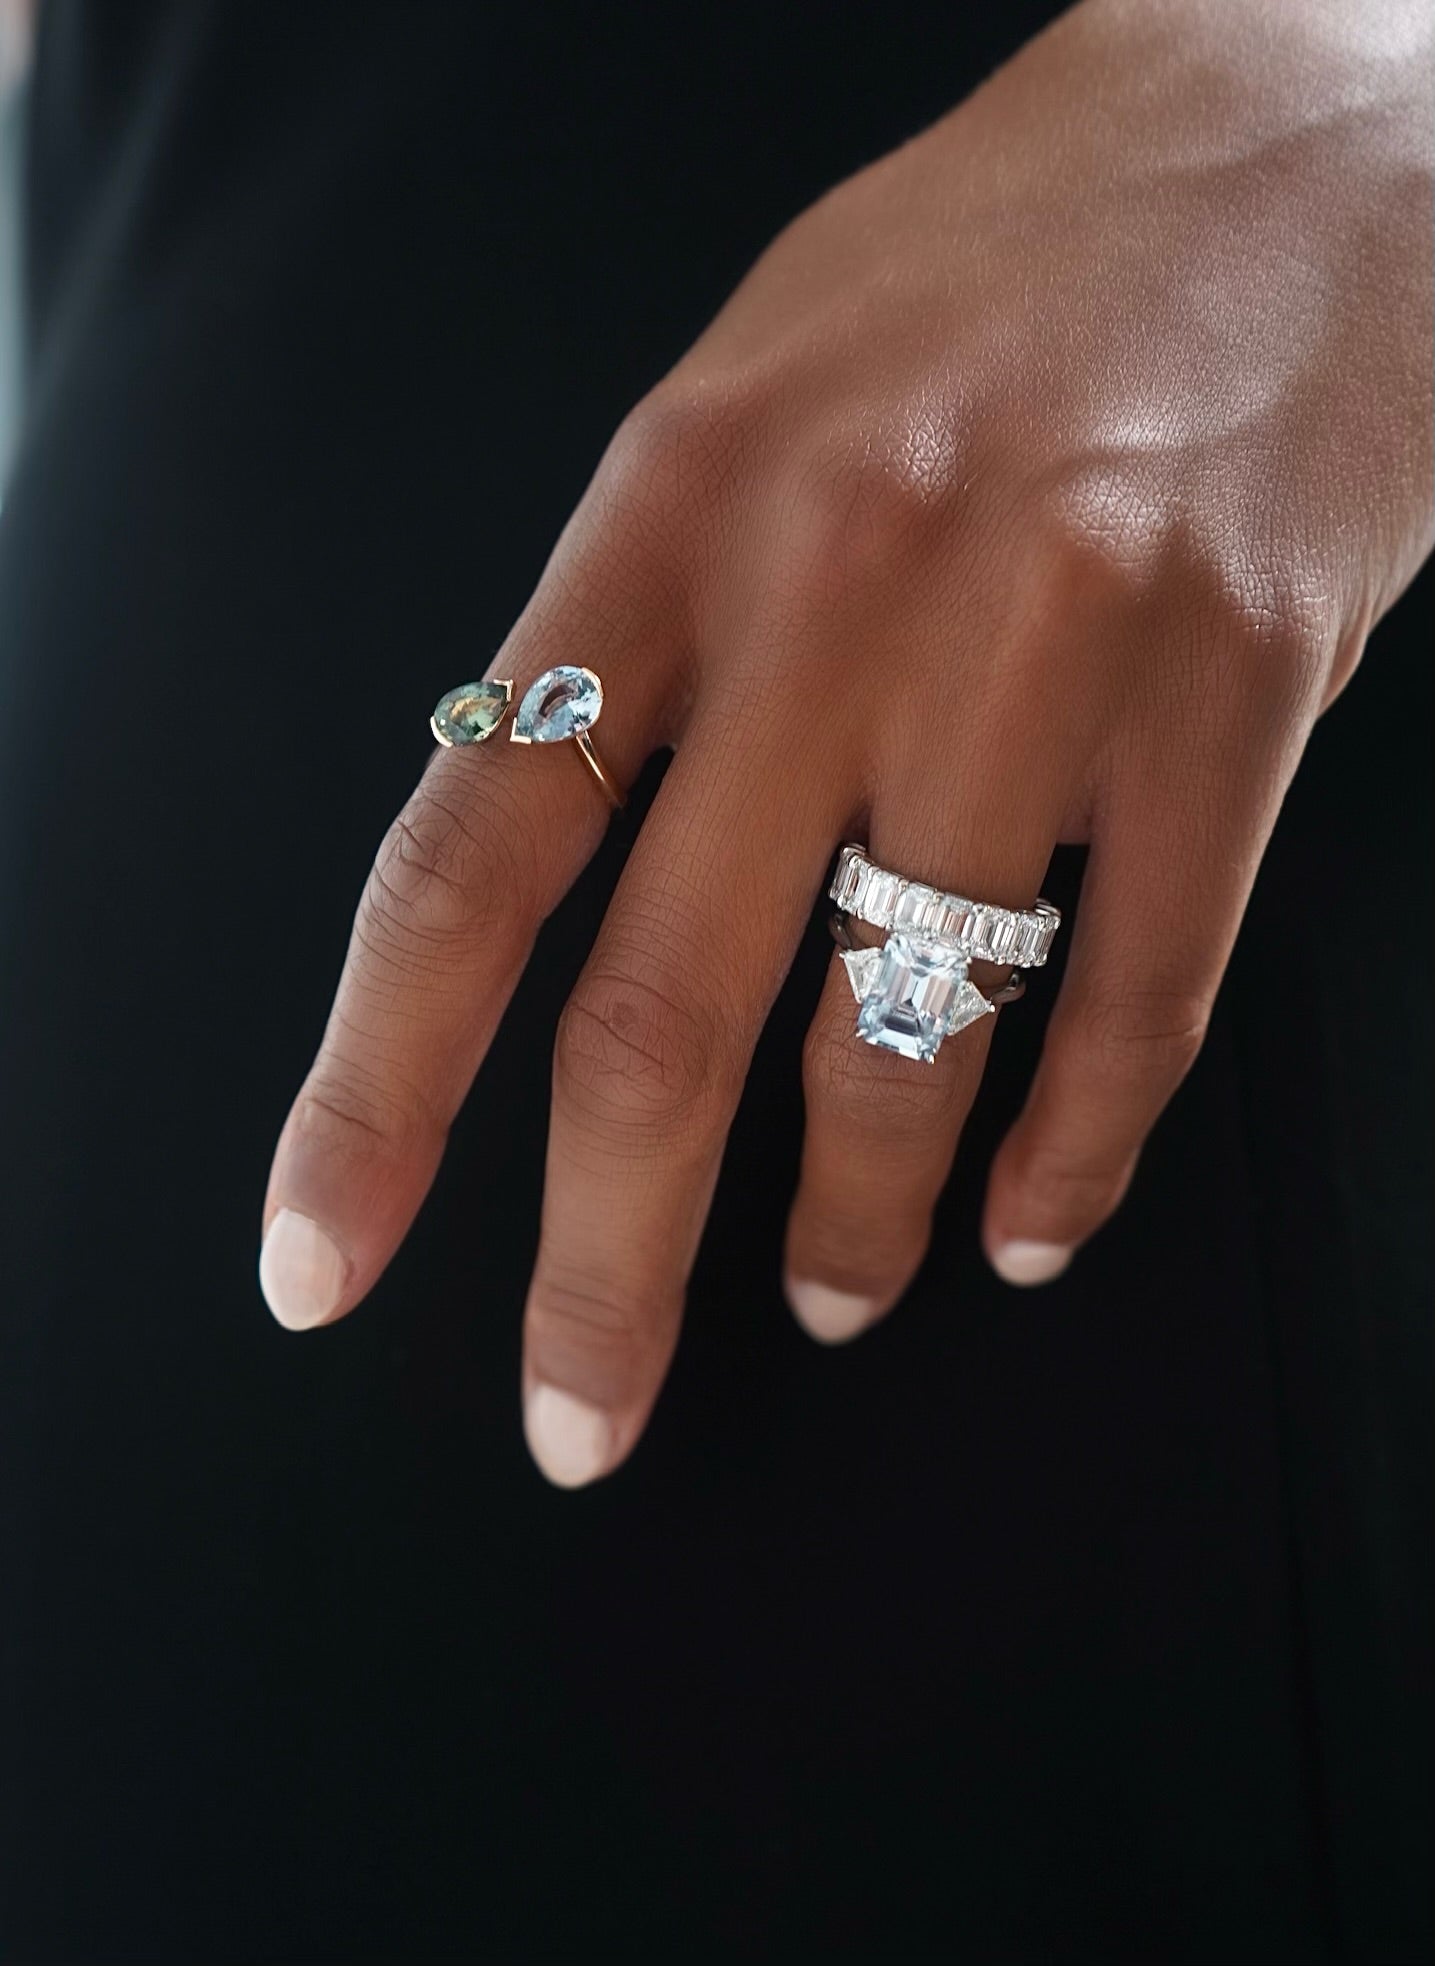 The Aster Aqua Sapphire & Diamond Ring